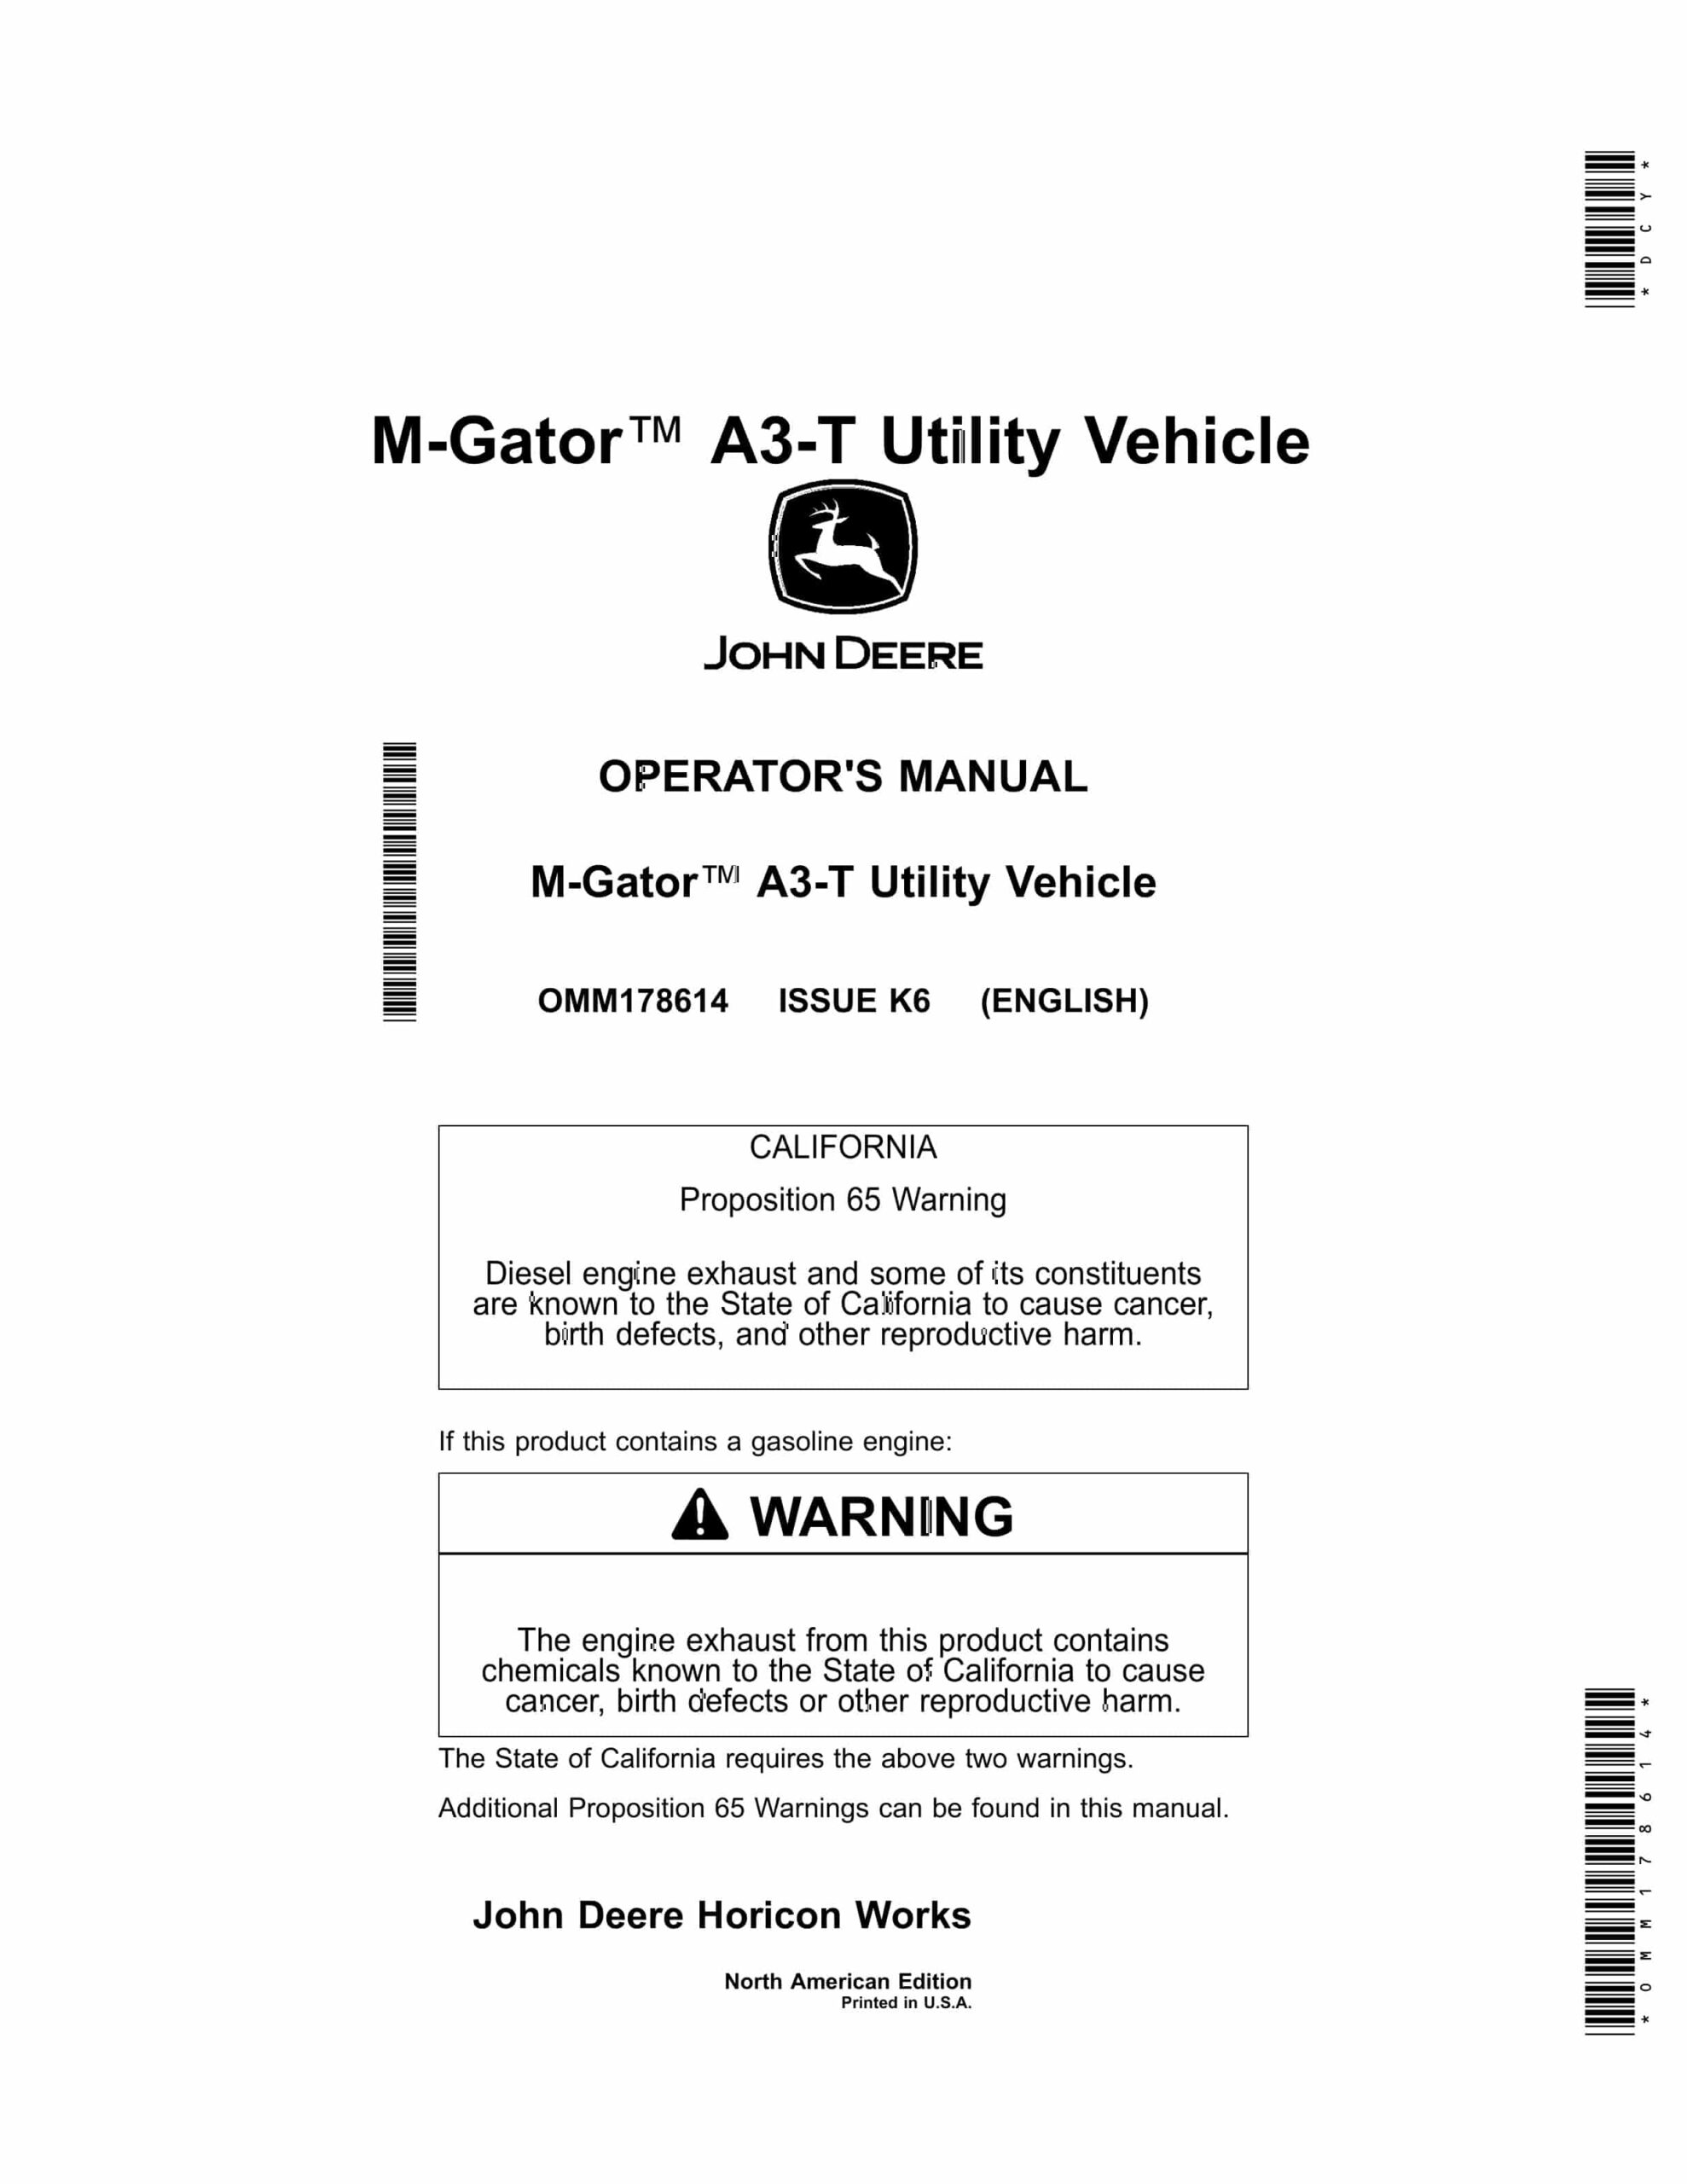 John Deere A3-T M-Gator Utility Vehicles Operator Manual OMM178614-1